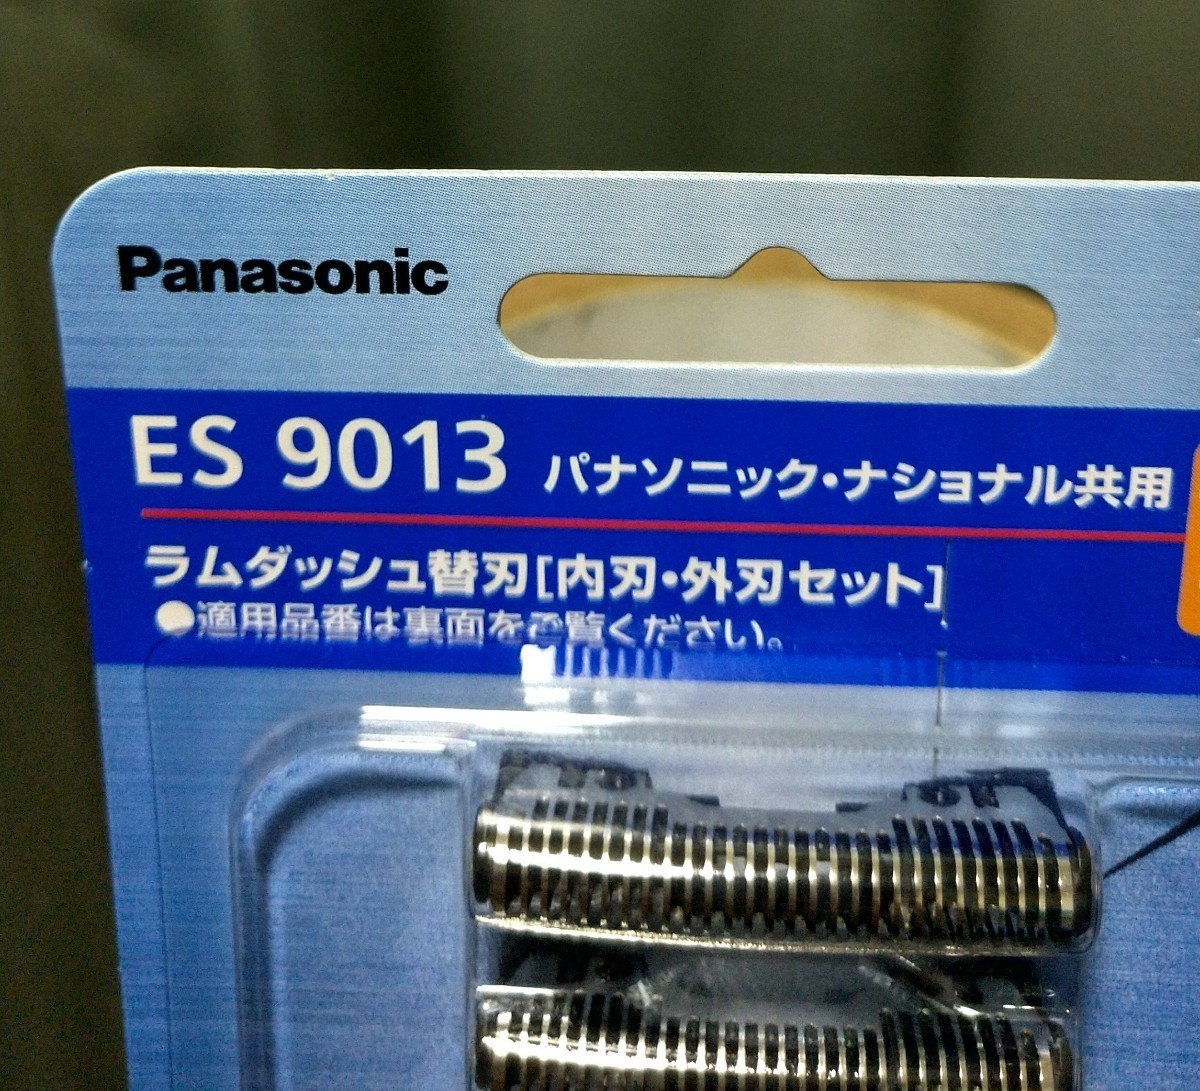 ES 9013 パナソニック メンズシェーバー用替刃（内刃、外刃のセット）